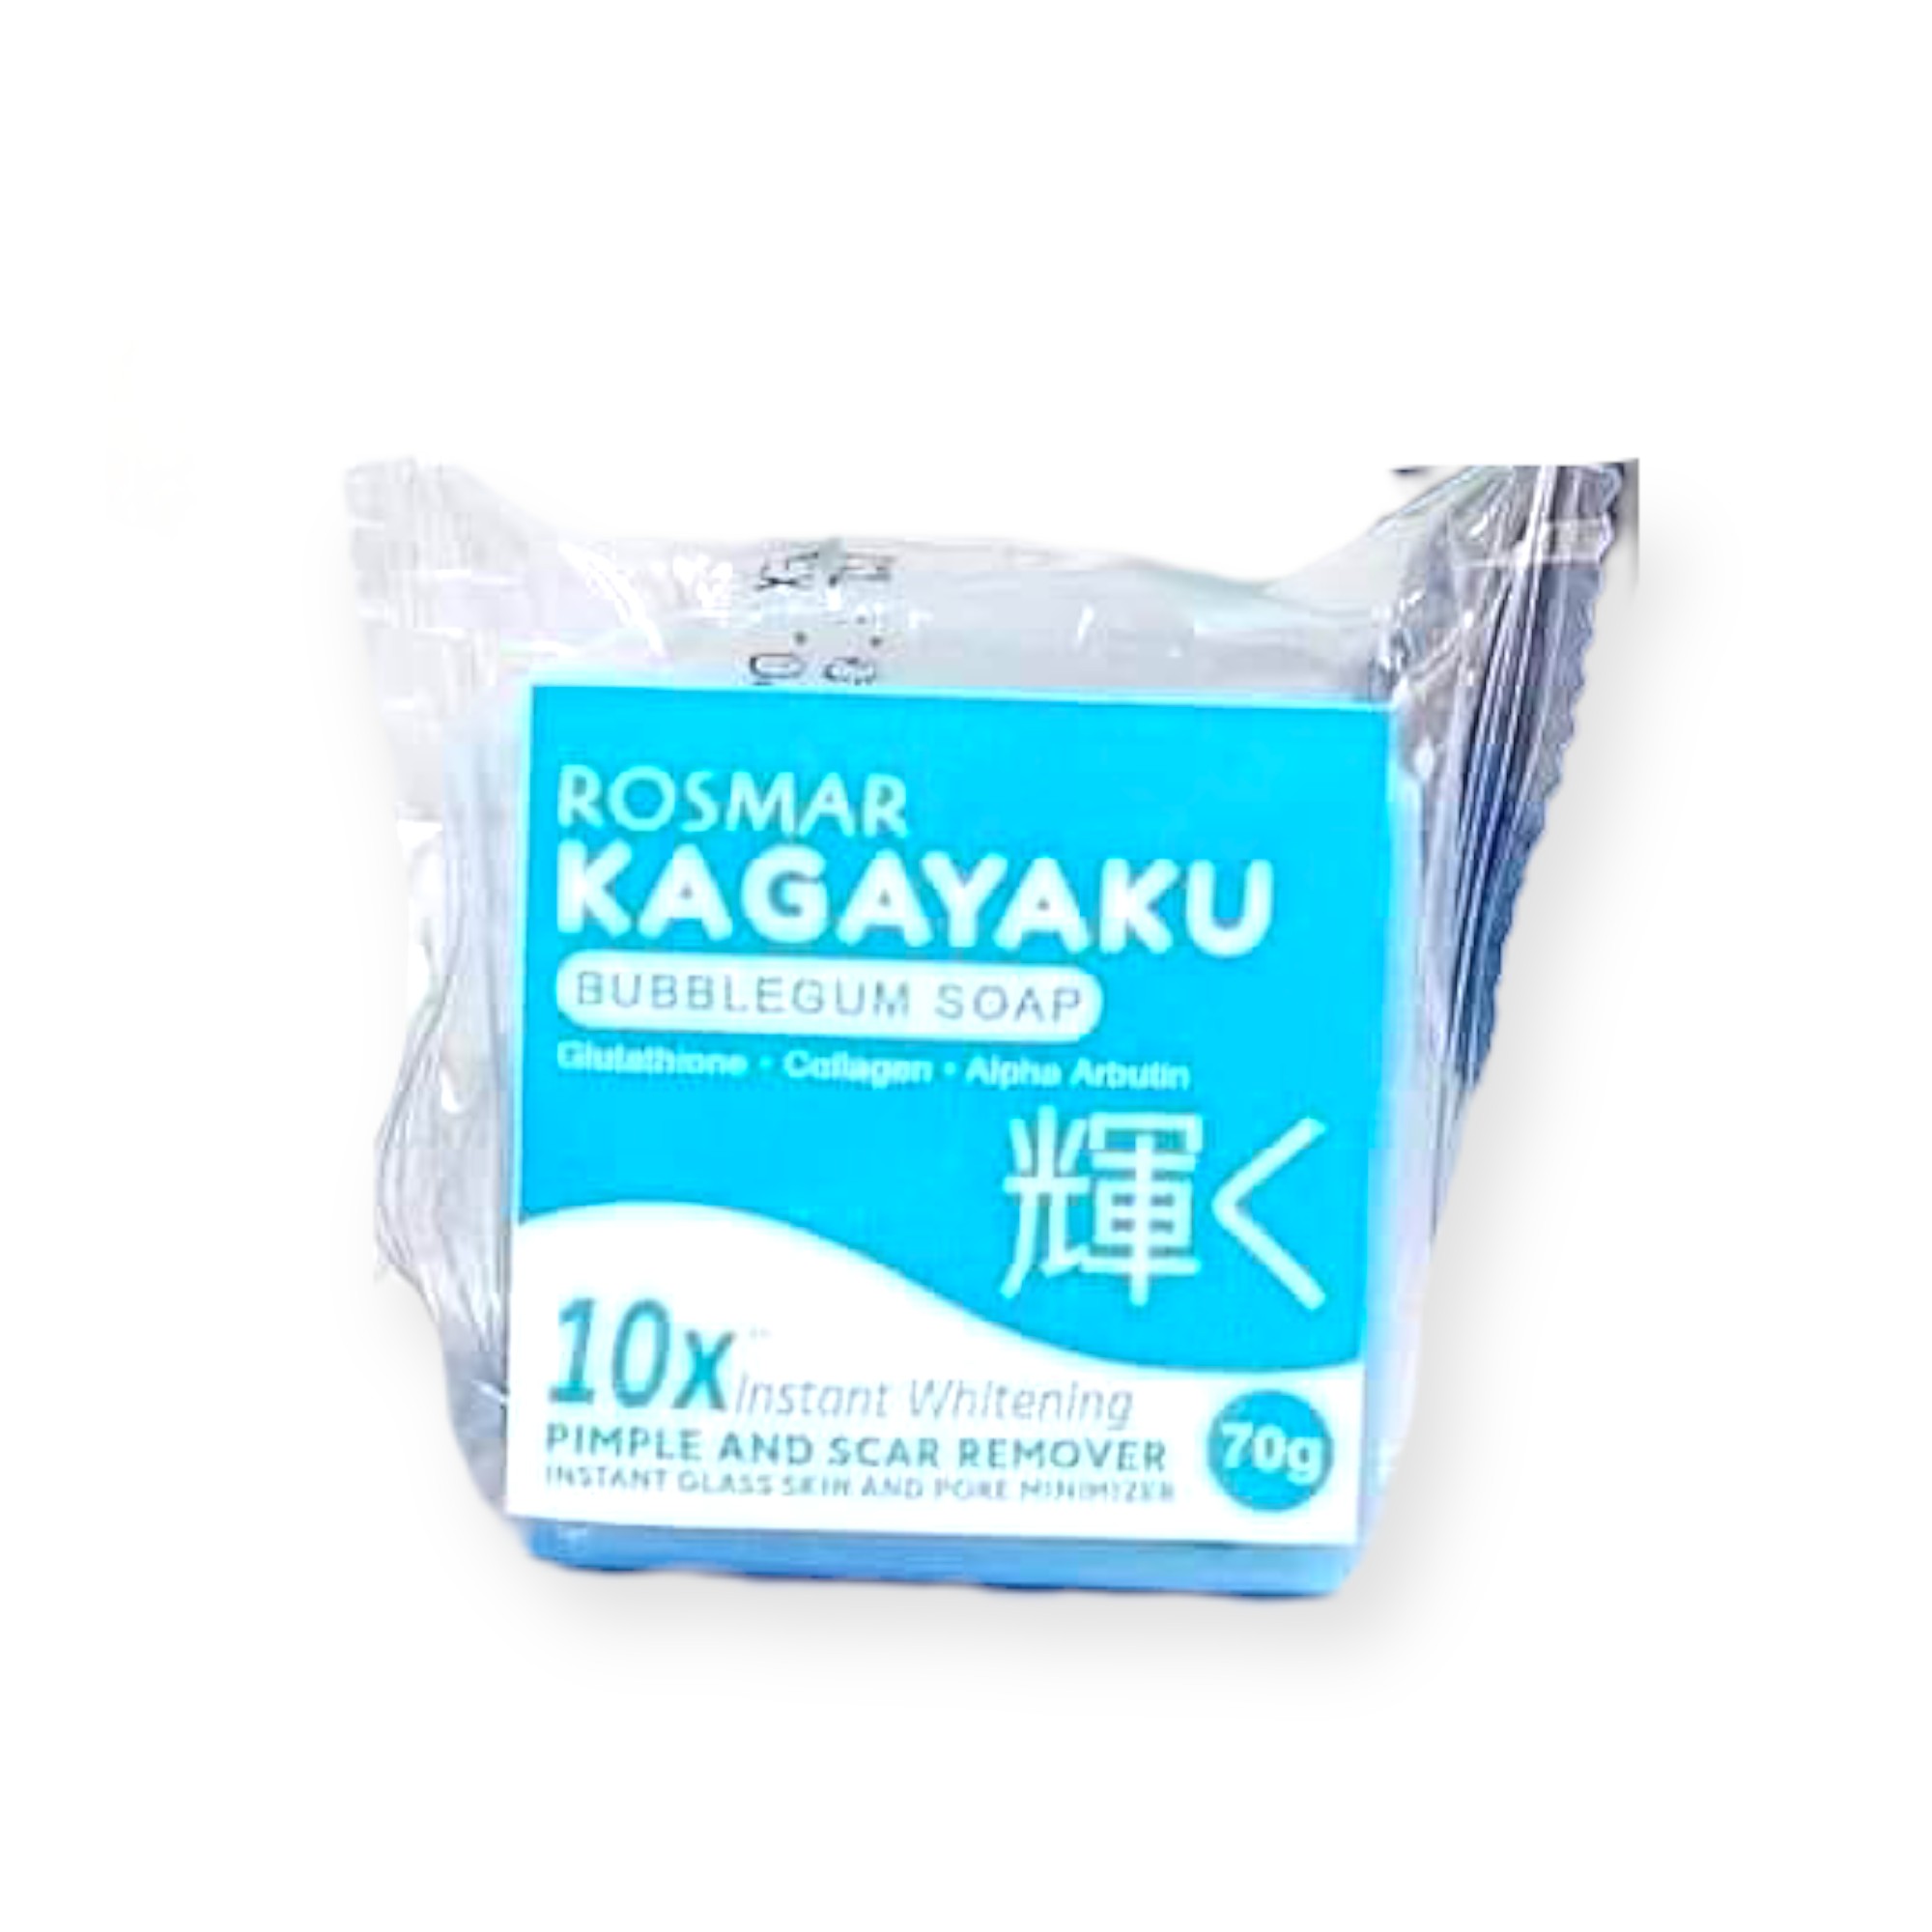 Rosmar Kagayaku - Bubblegum Soap - Instant Whitening Pimple and Scar Remover 70g ( Blue )